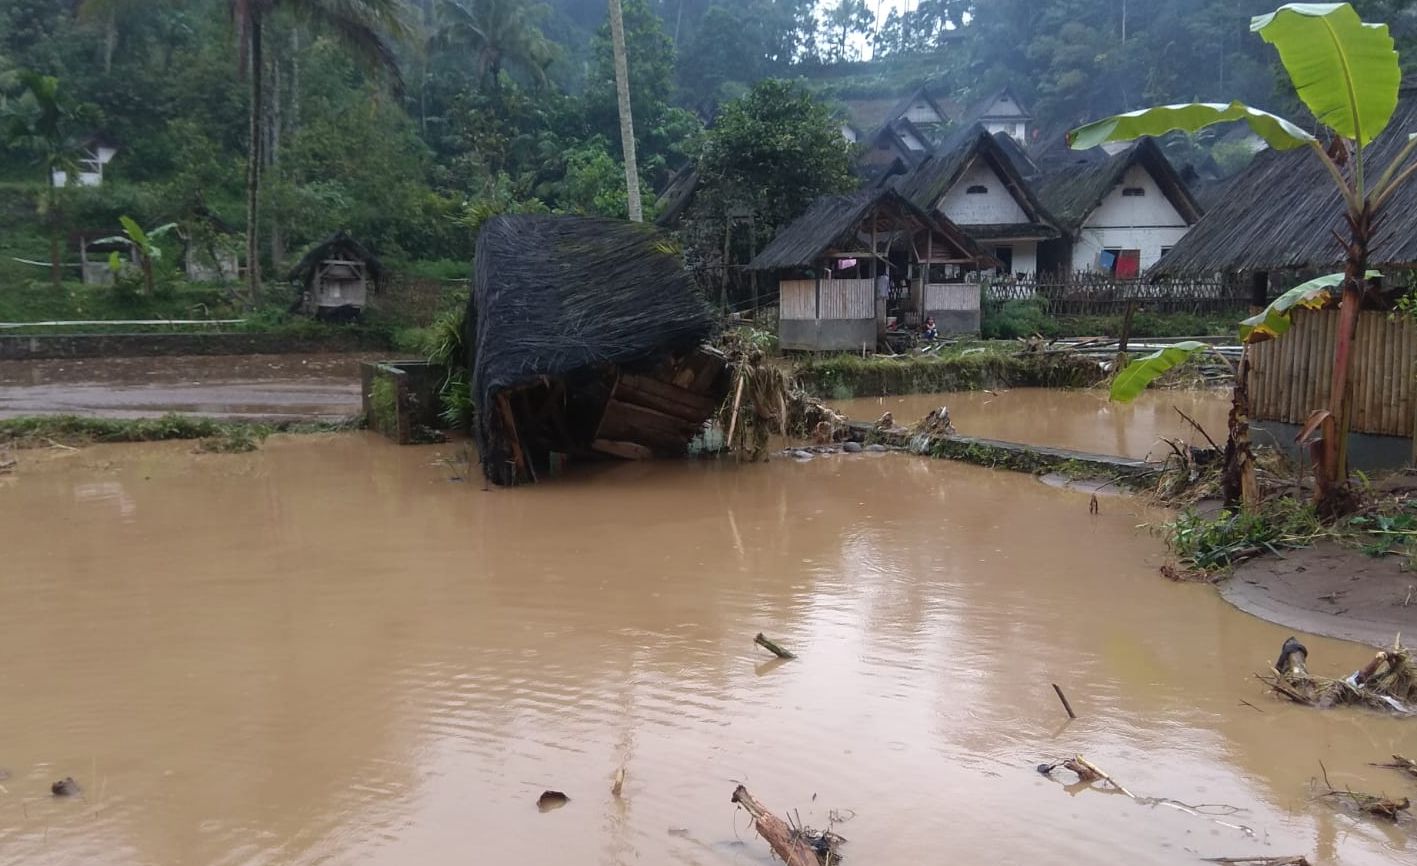 Pertamakali Terjadi Selama Ratusan Tahun, Sungai Ciwulan Meluap Menyebabkan Banjir Bandang Melanda Pemukiman Adat Kampung Naga di Desa Neglasari, Kecamatan Salawu, Kabupaten Tasikmalaya. 